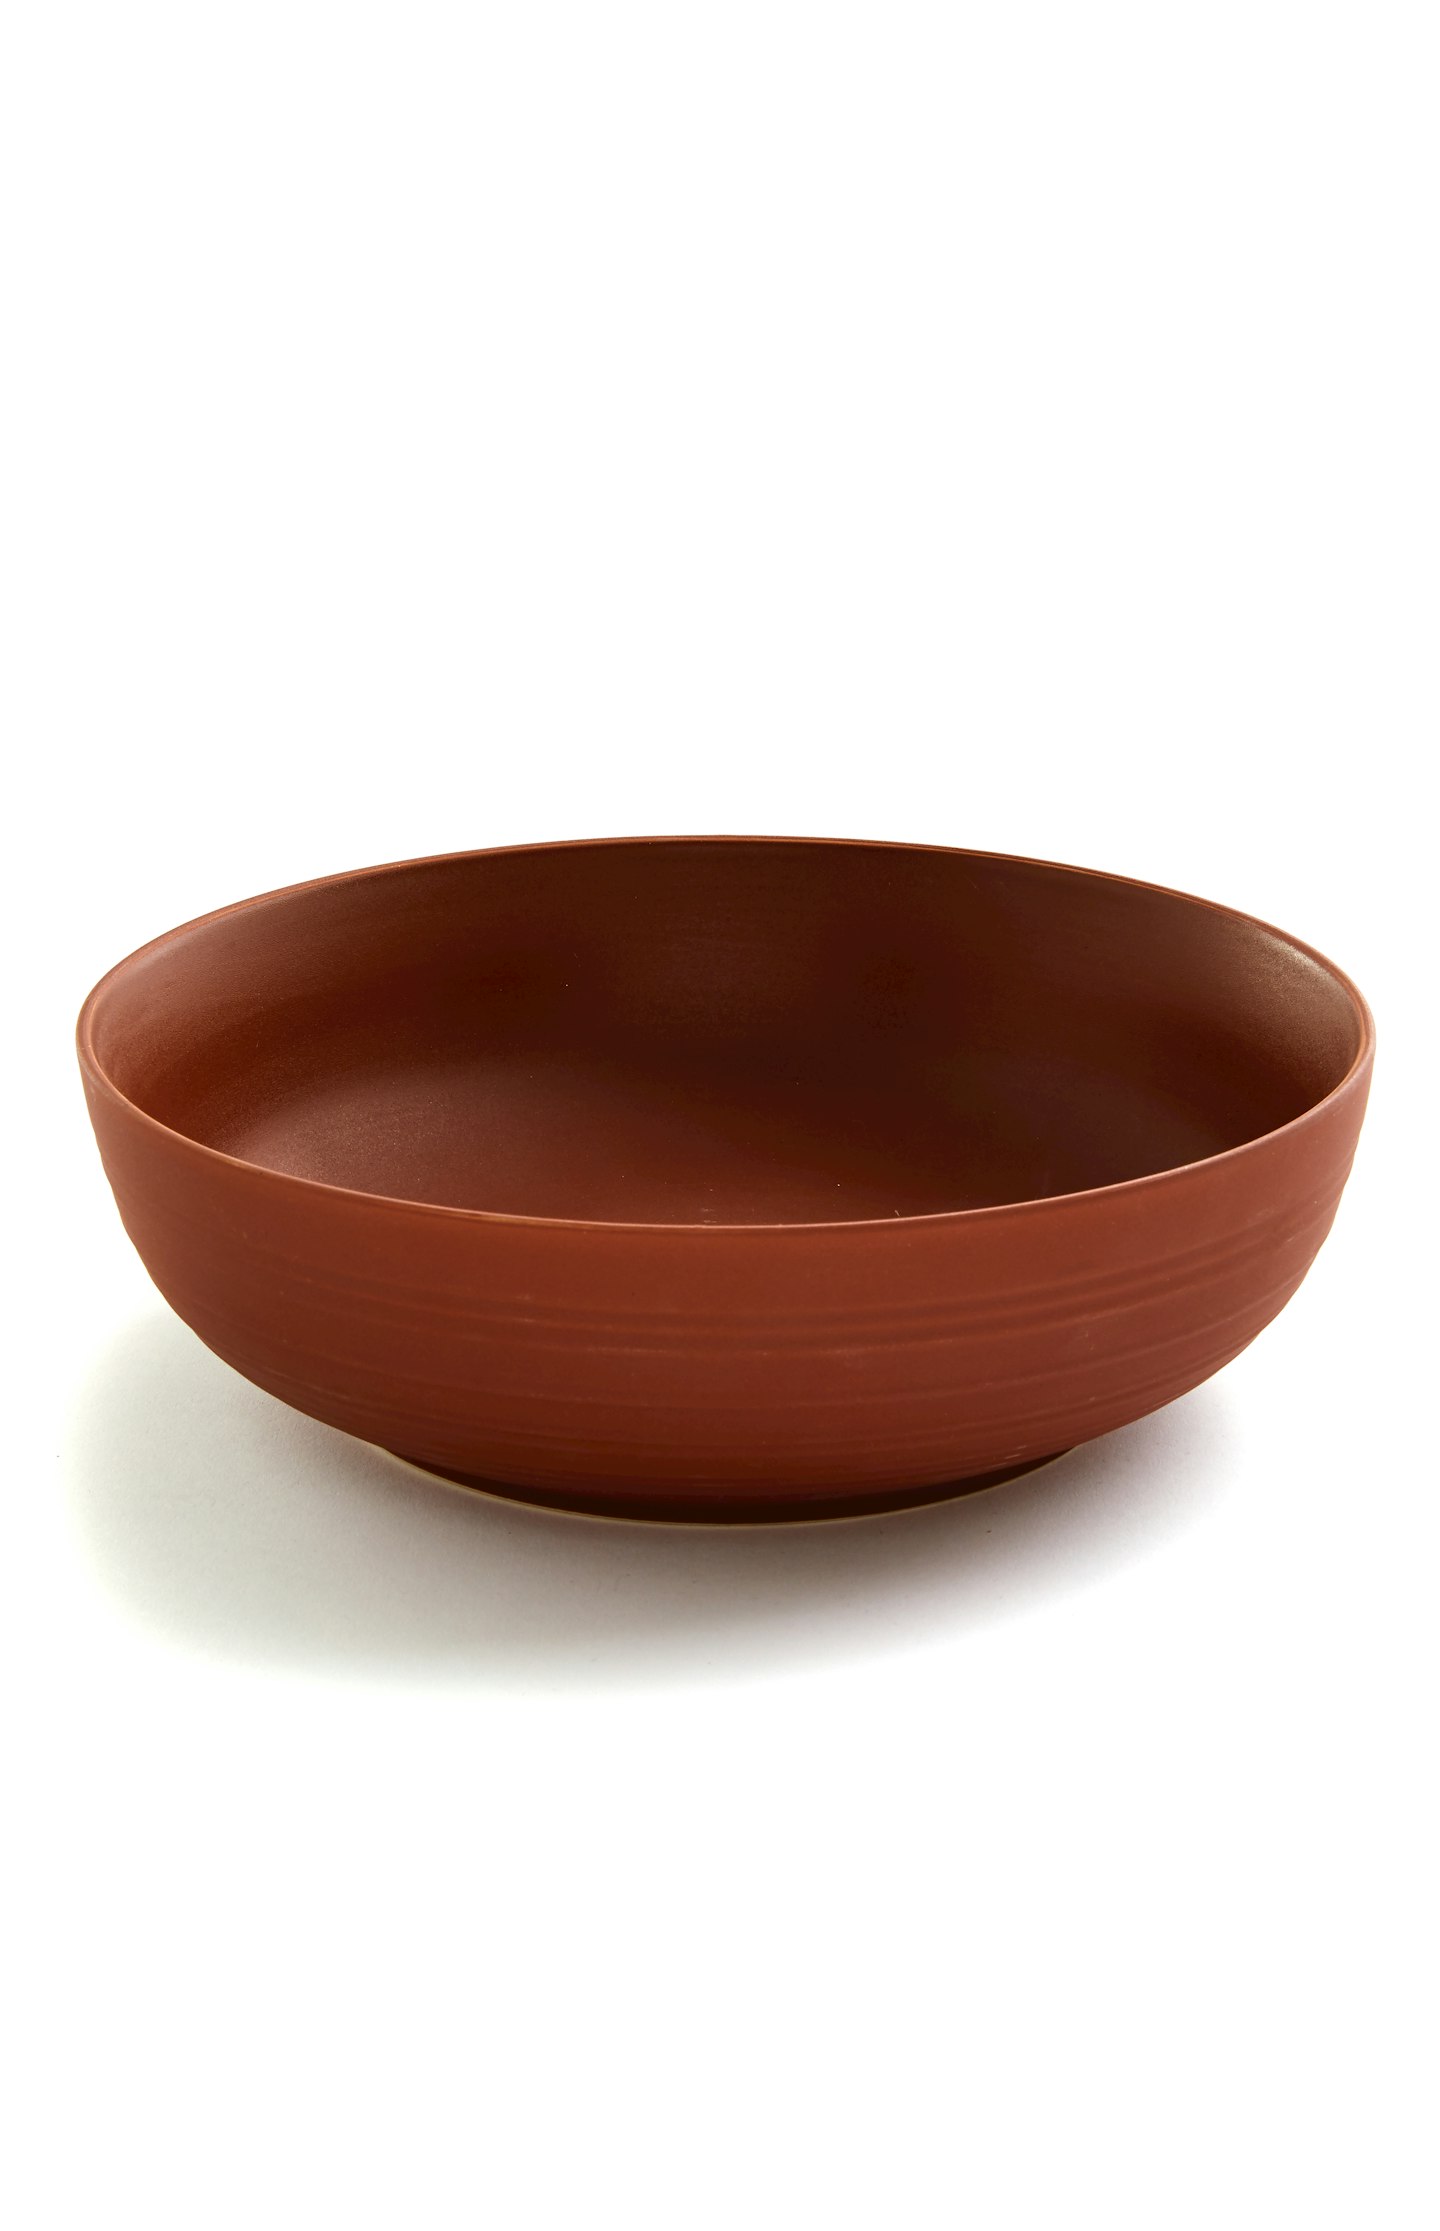 Primark, Terracotta Large Serving Bowl, £7